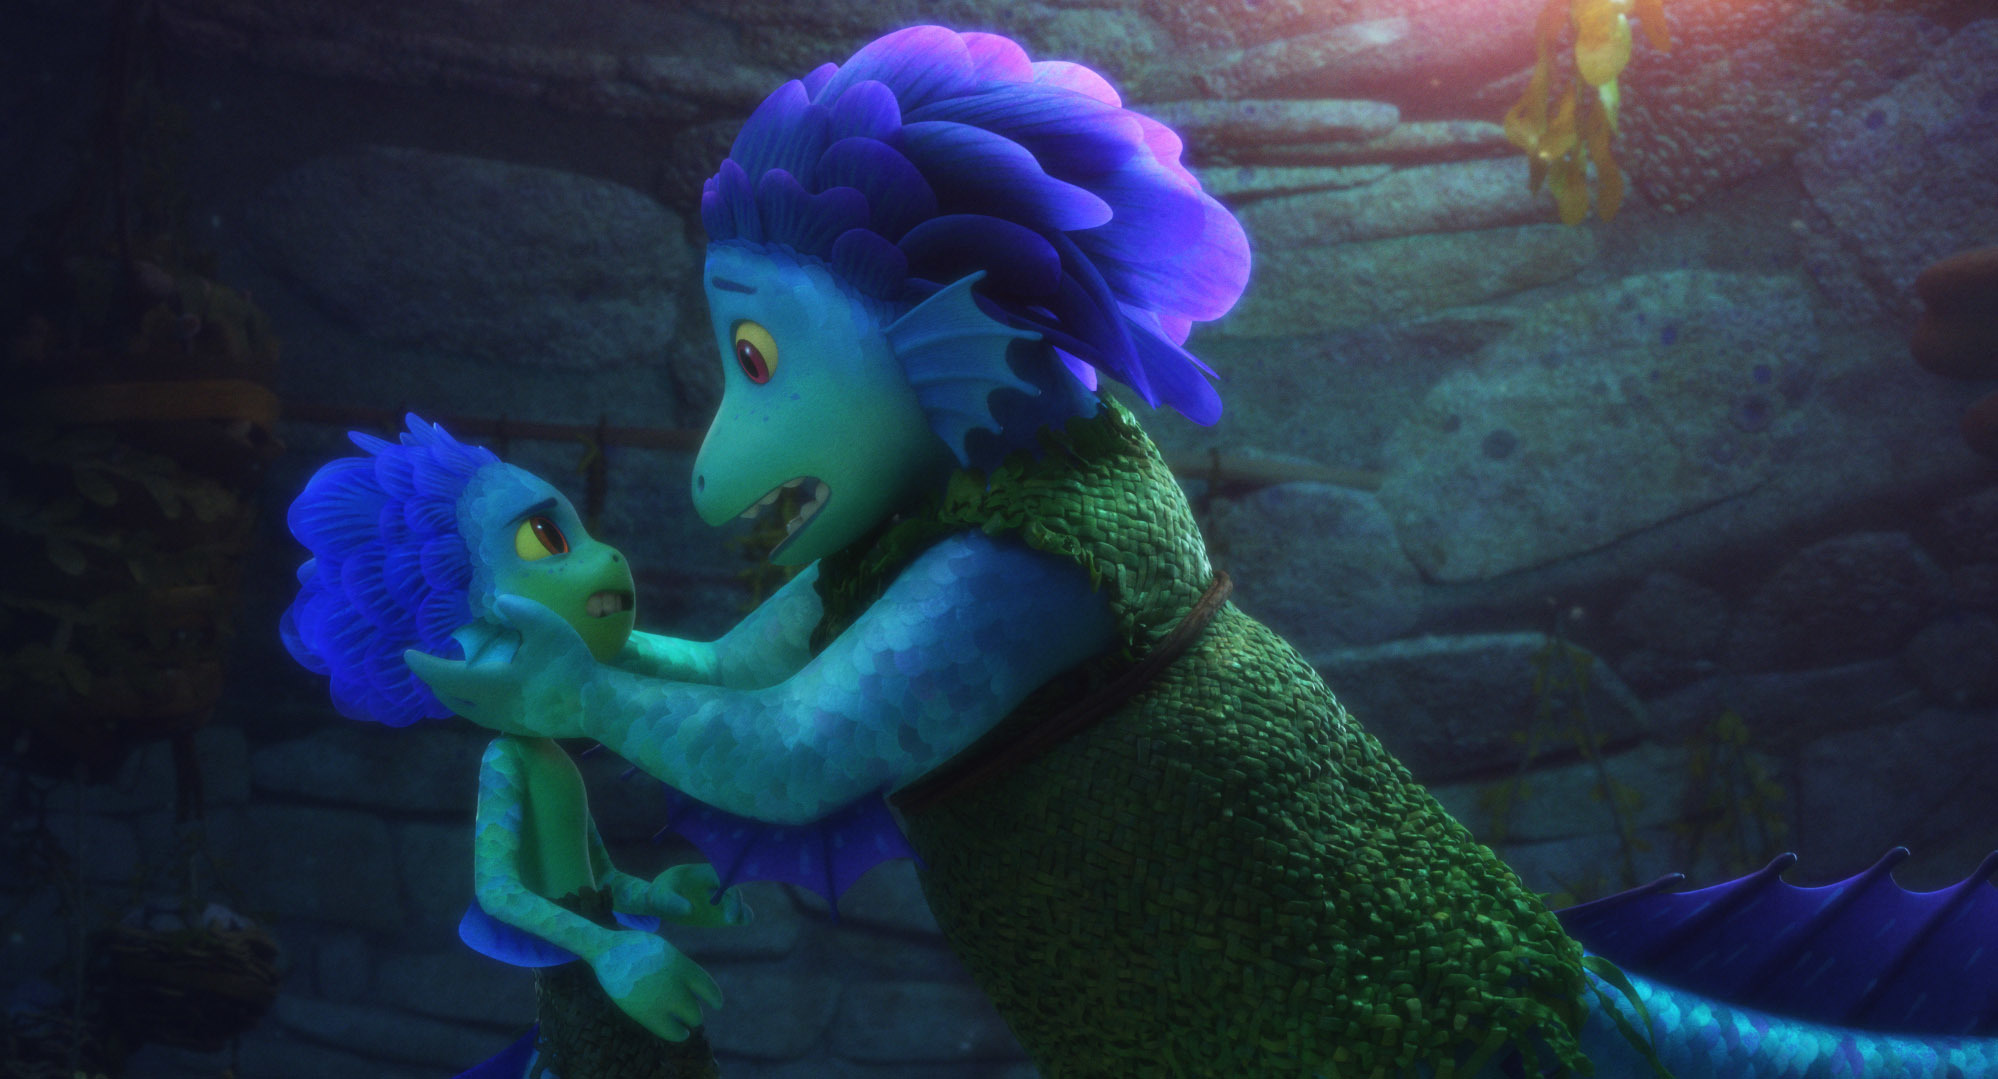 Luca recensione film d'animazione Disney Pixar di Enrico Casarosa